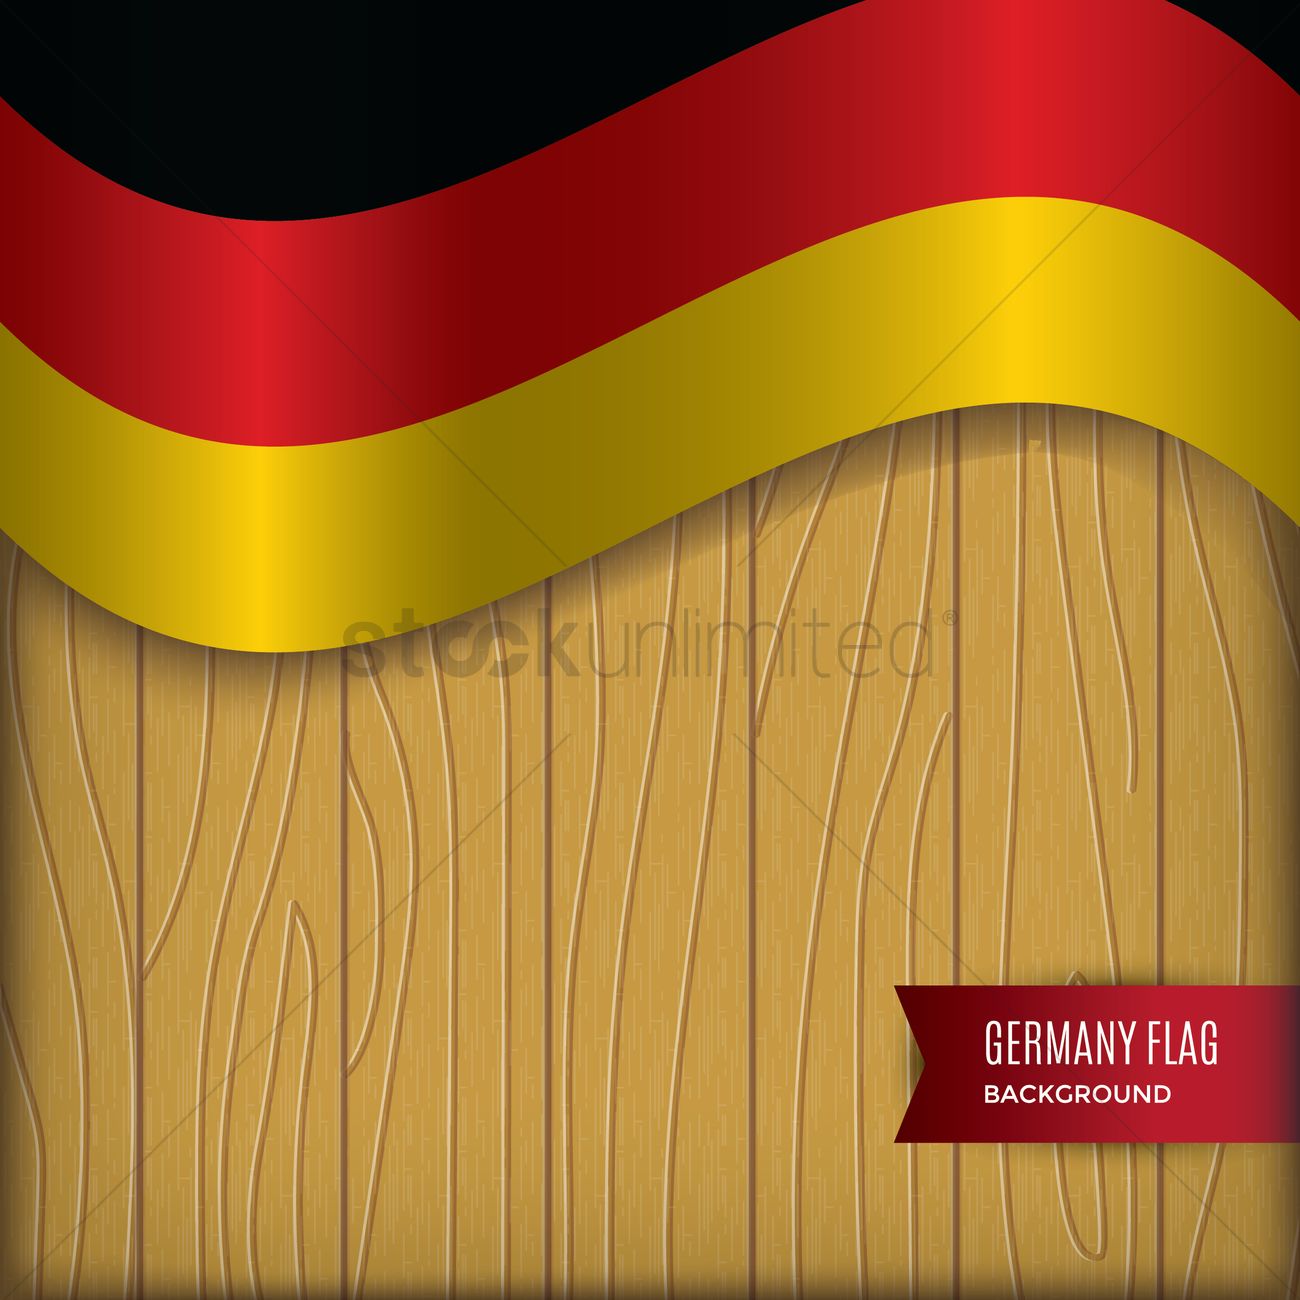 Germany Flag Background Design Vector Image Stockunlimited